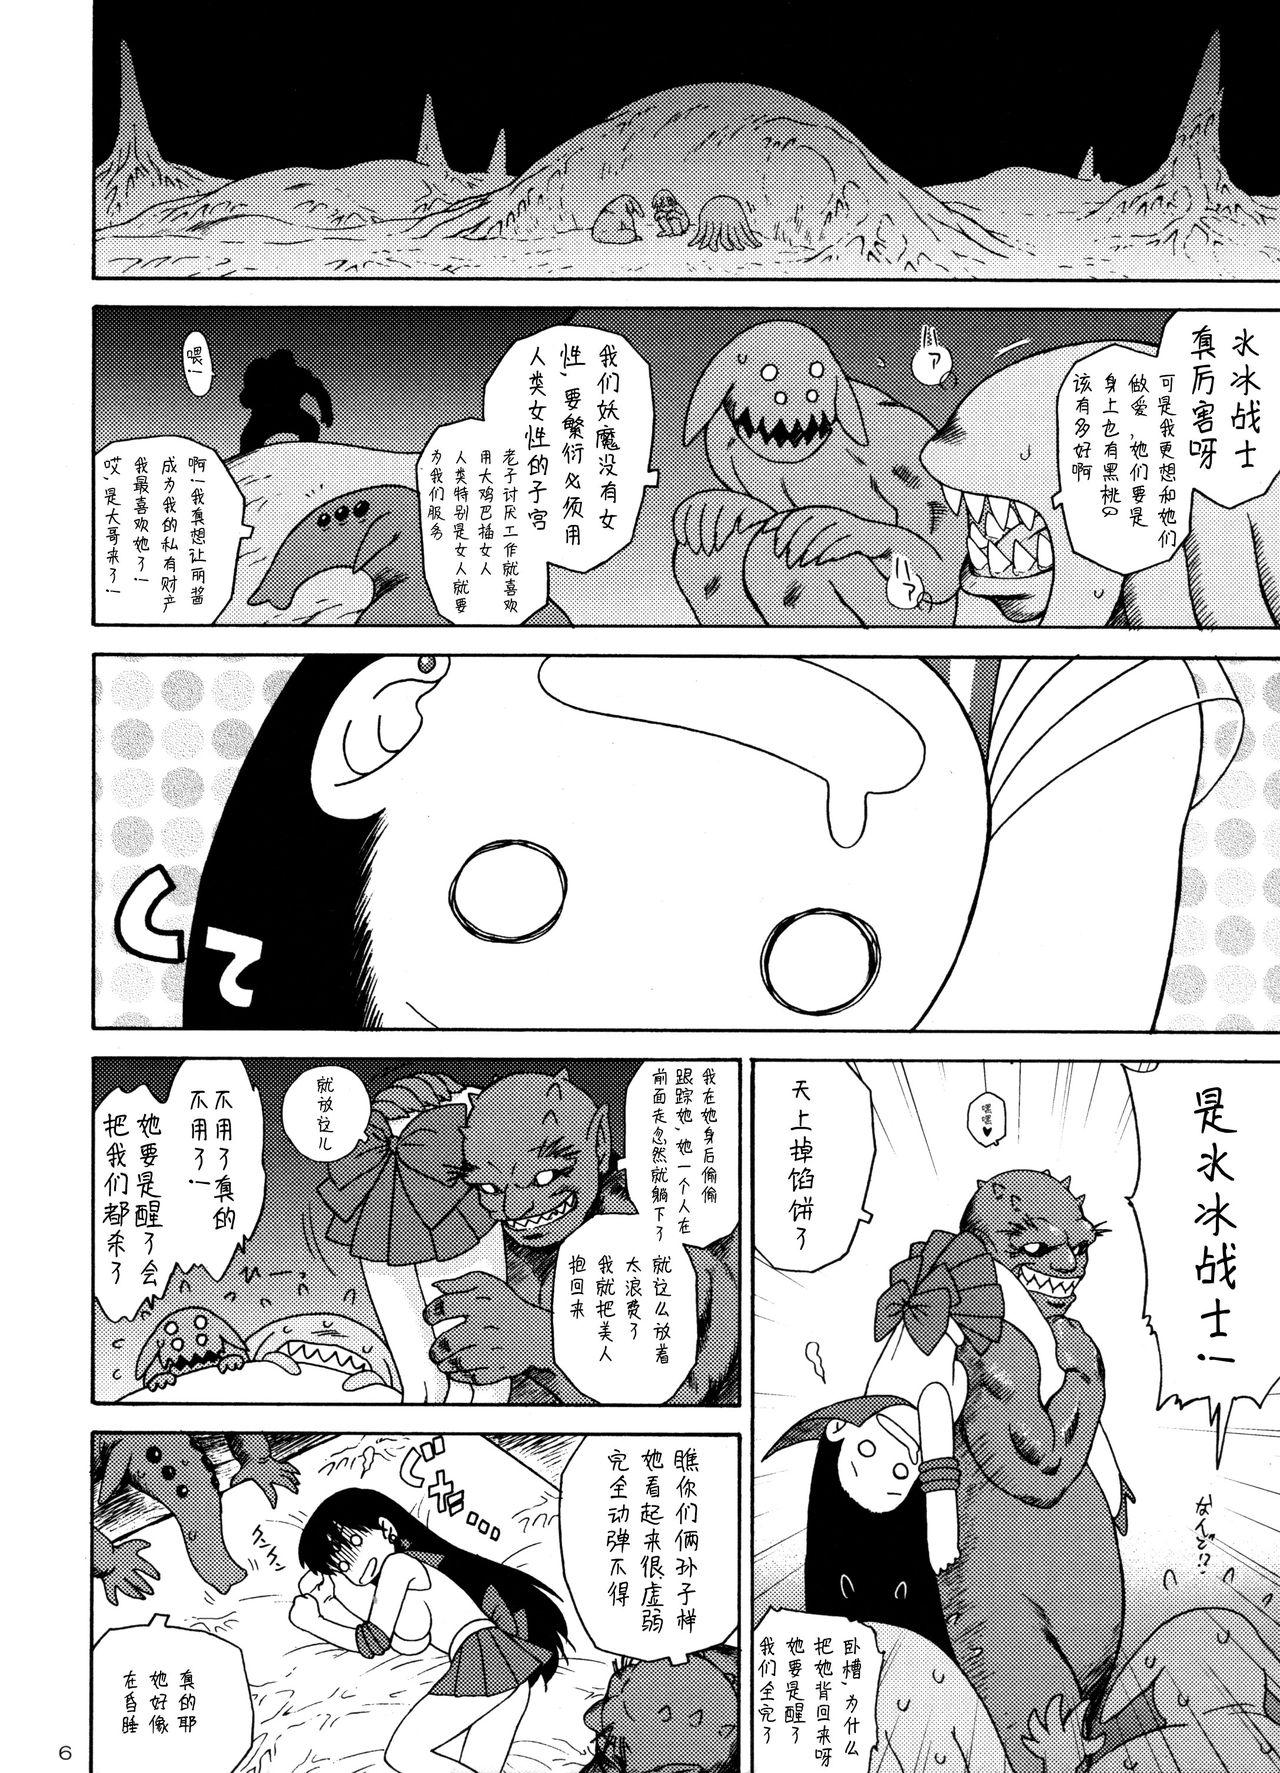 Holes QUEEN OF SPADES - 黑桃皇后 - Sailor moon Butt Fuck - Page 9